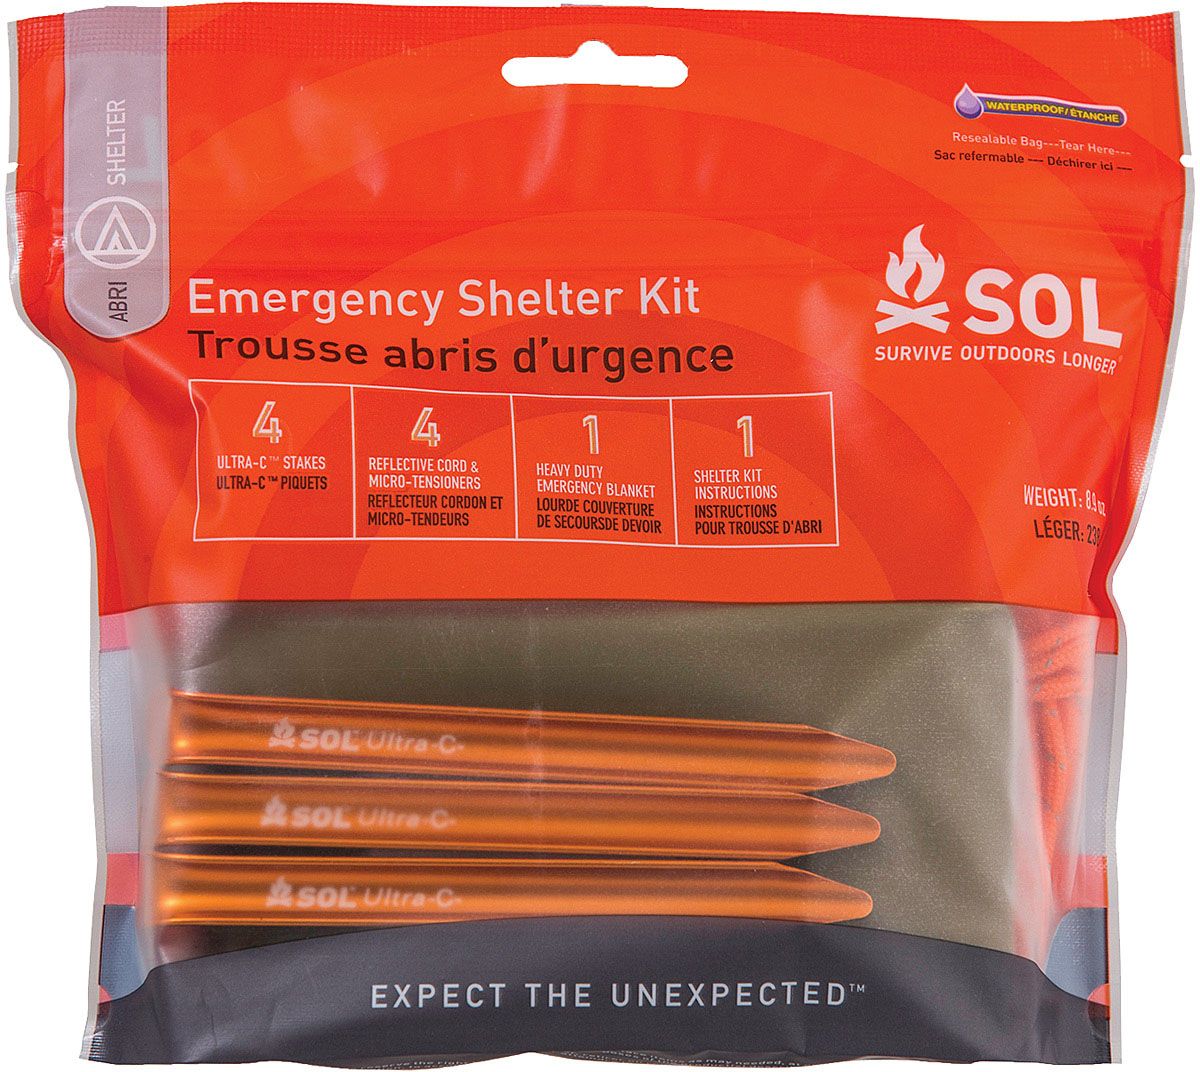 Sol | Emergency Shelter kit, Emergency Shelter, Sol, Defiance Outdoor Gear Co.